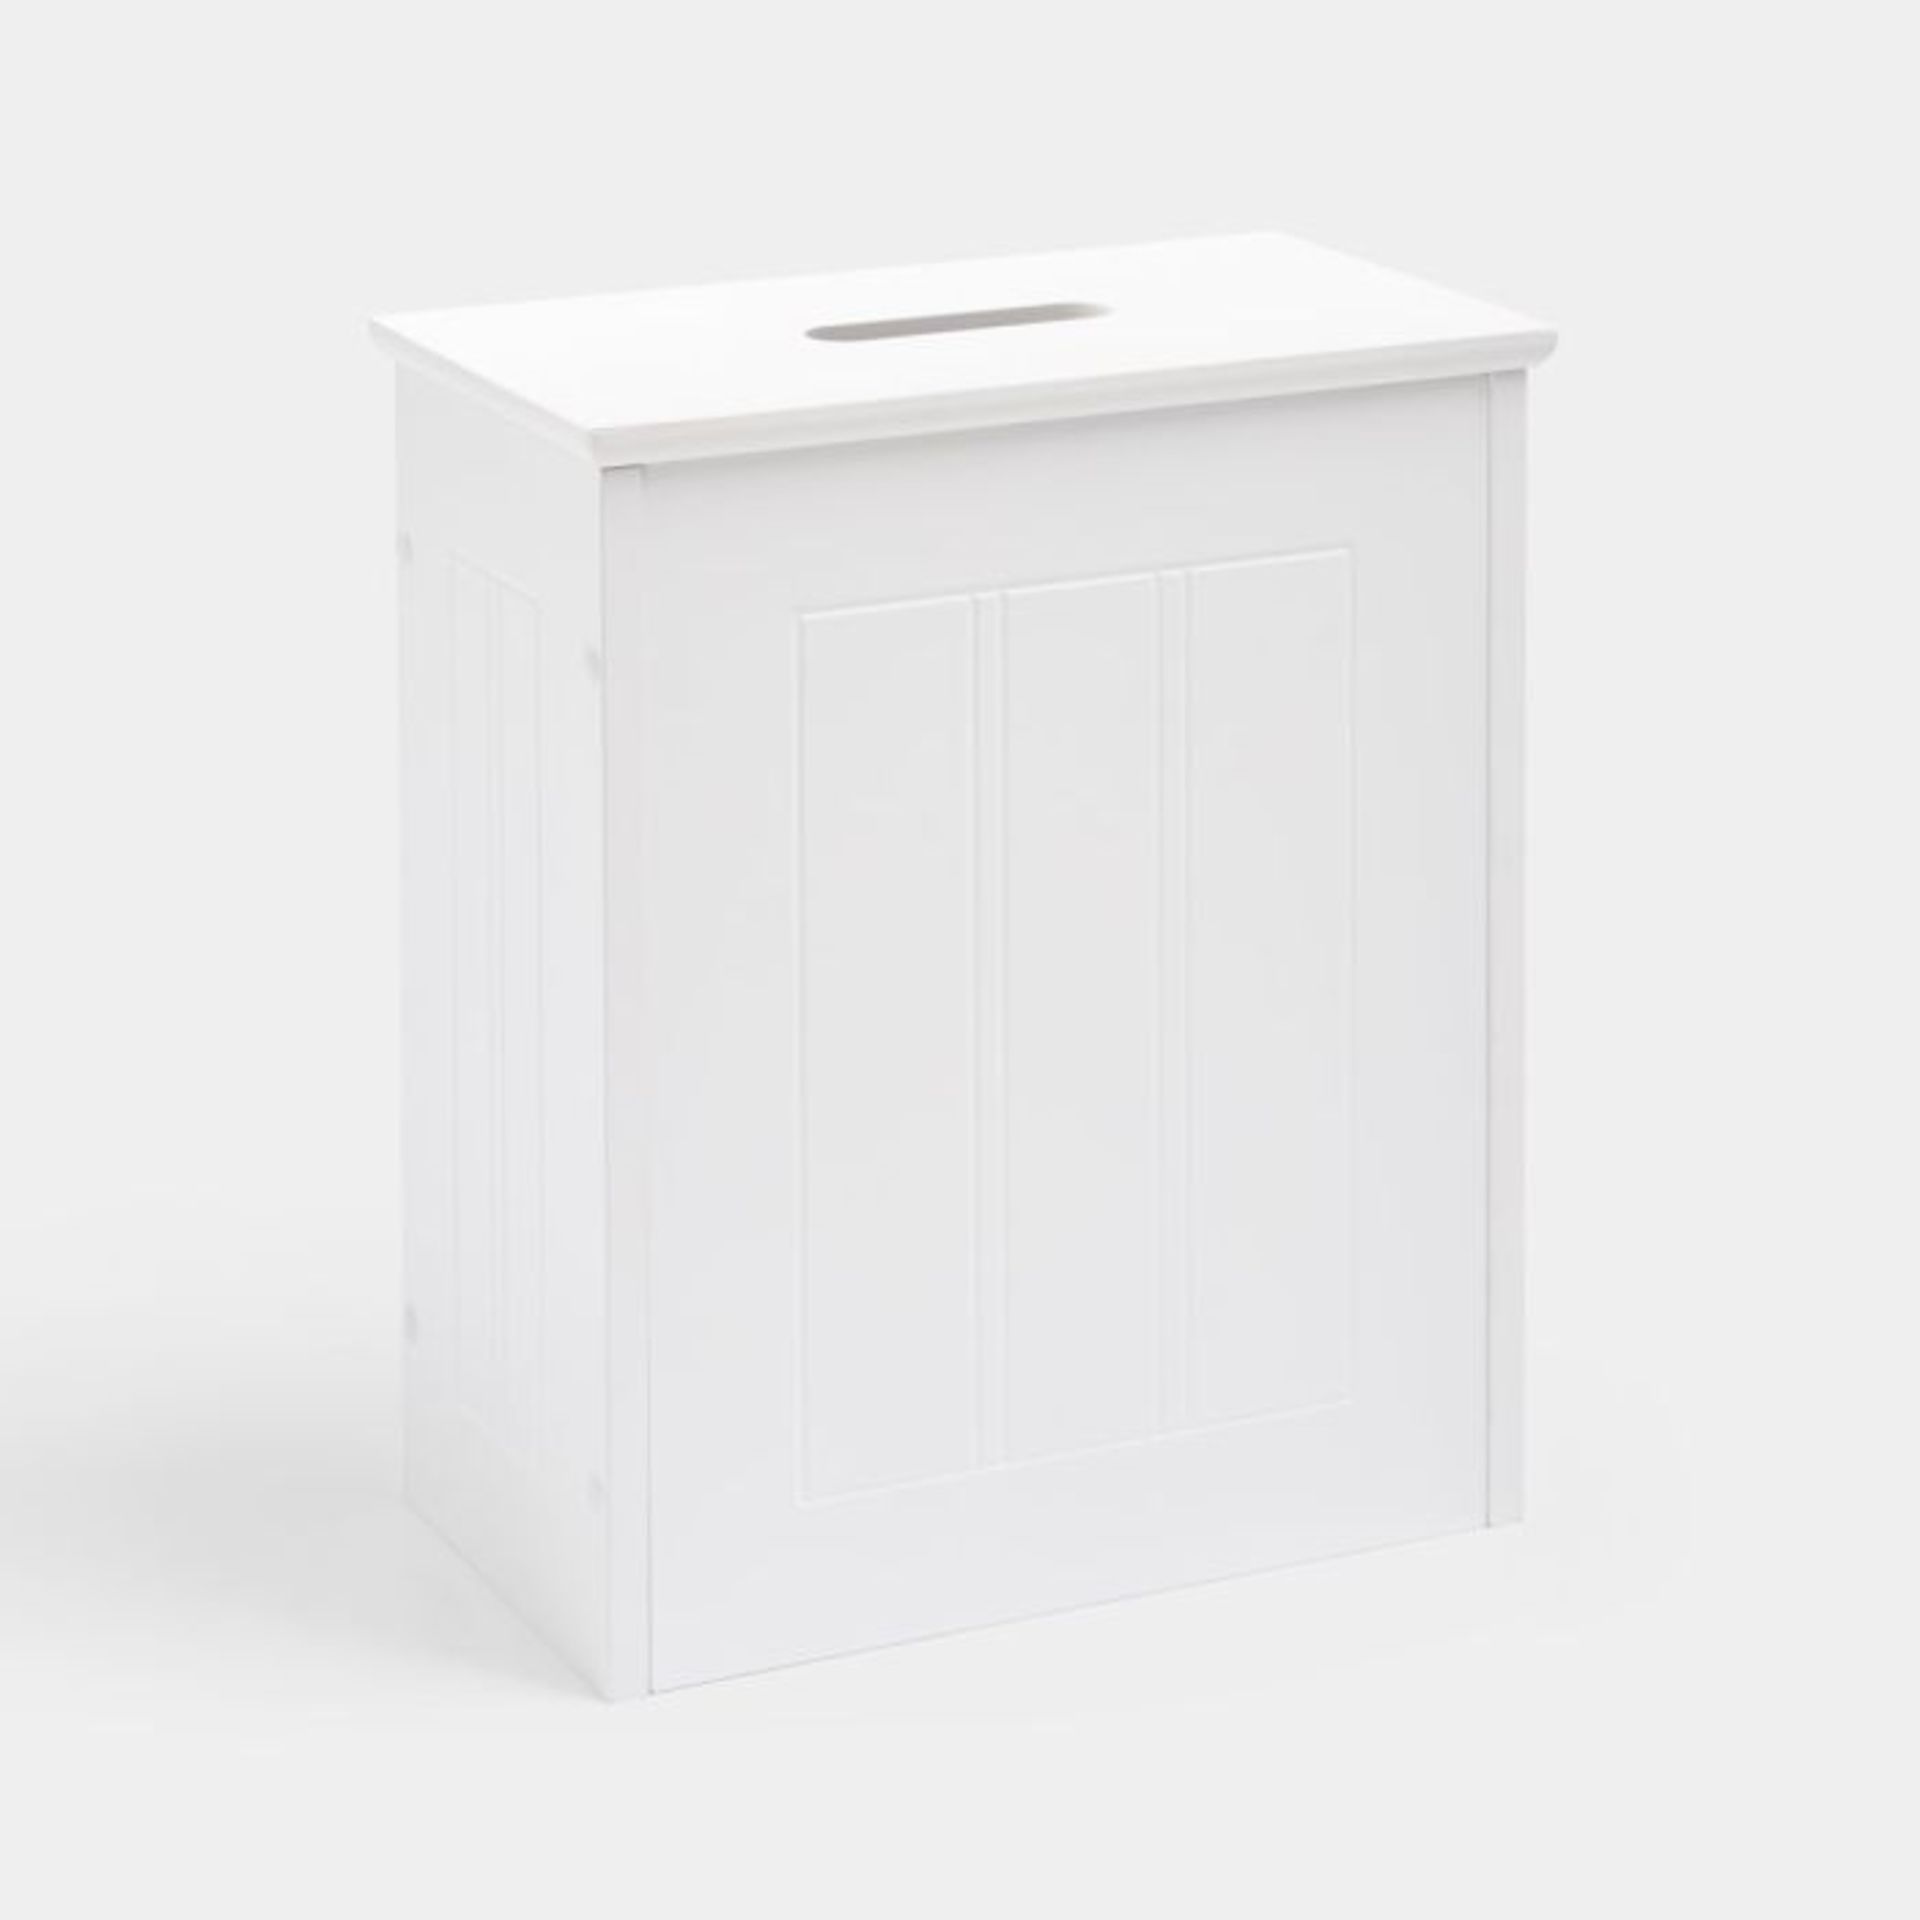 Holbrook White Slimline Bathroom Storage Box. - ER33. Even the smallest bathroom can provide storage